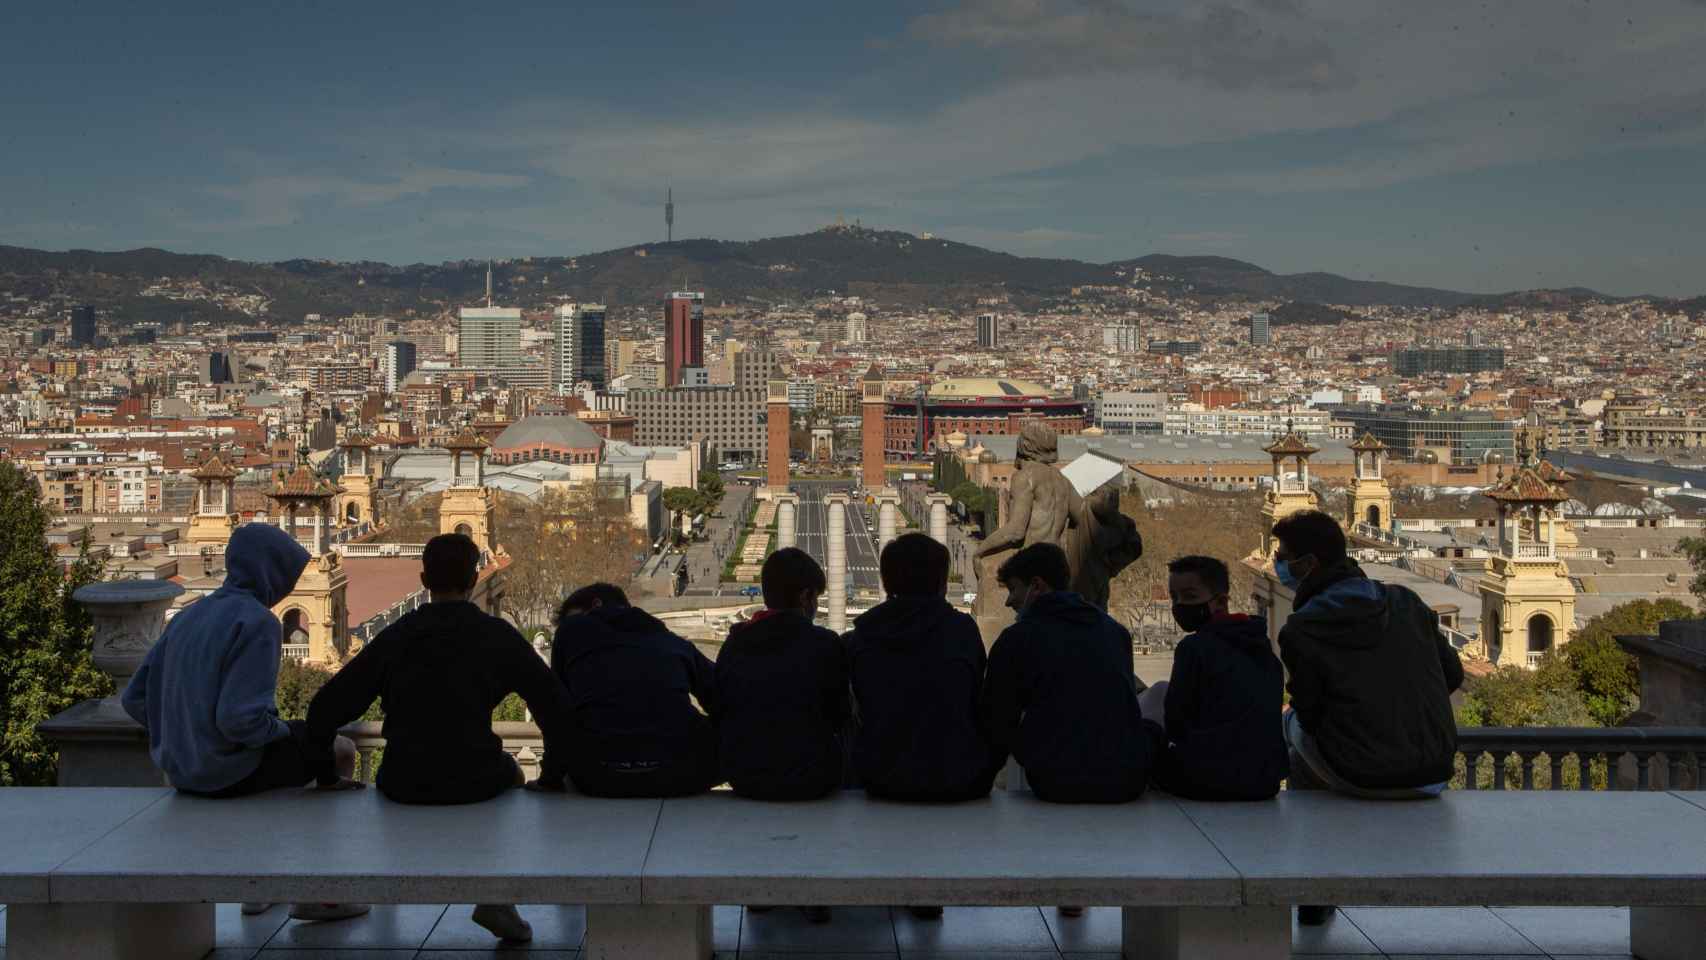 Un grupo de jóvenes observa Barcelona desde la entrada principal del MNAC / EFE - Enric Fontcuberta